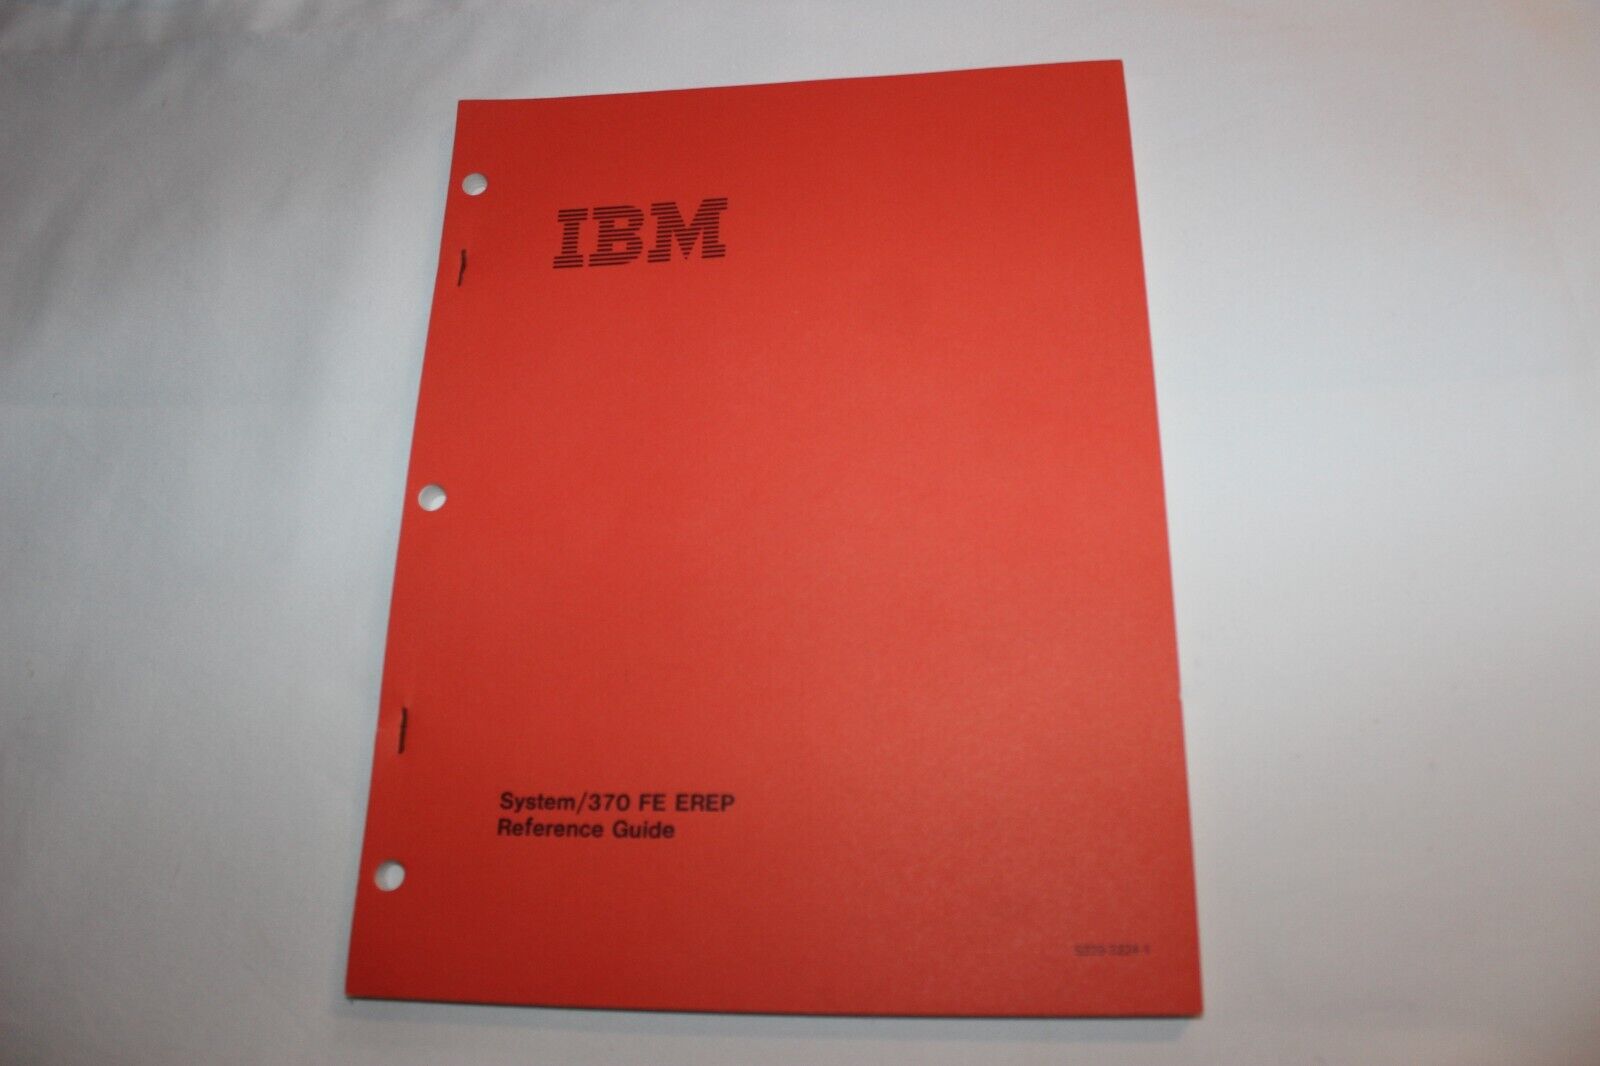 Vintage 1977 2nd Ed IBM SYSTEM/370 FE EREP Reference Guide Computer Book